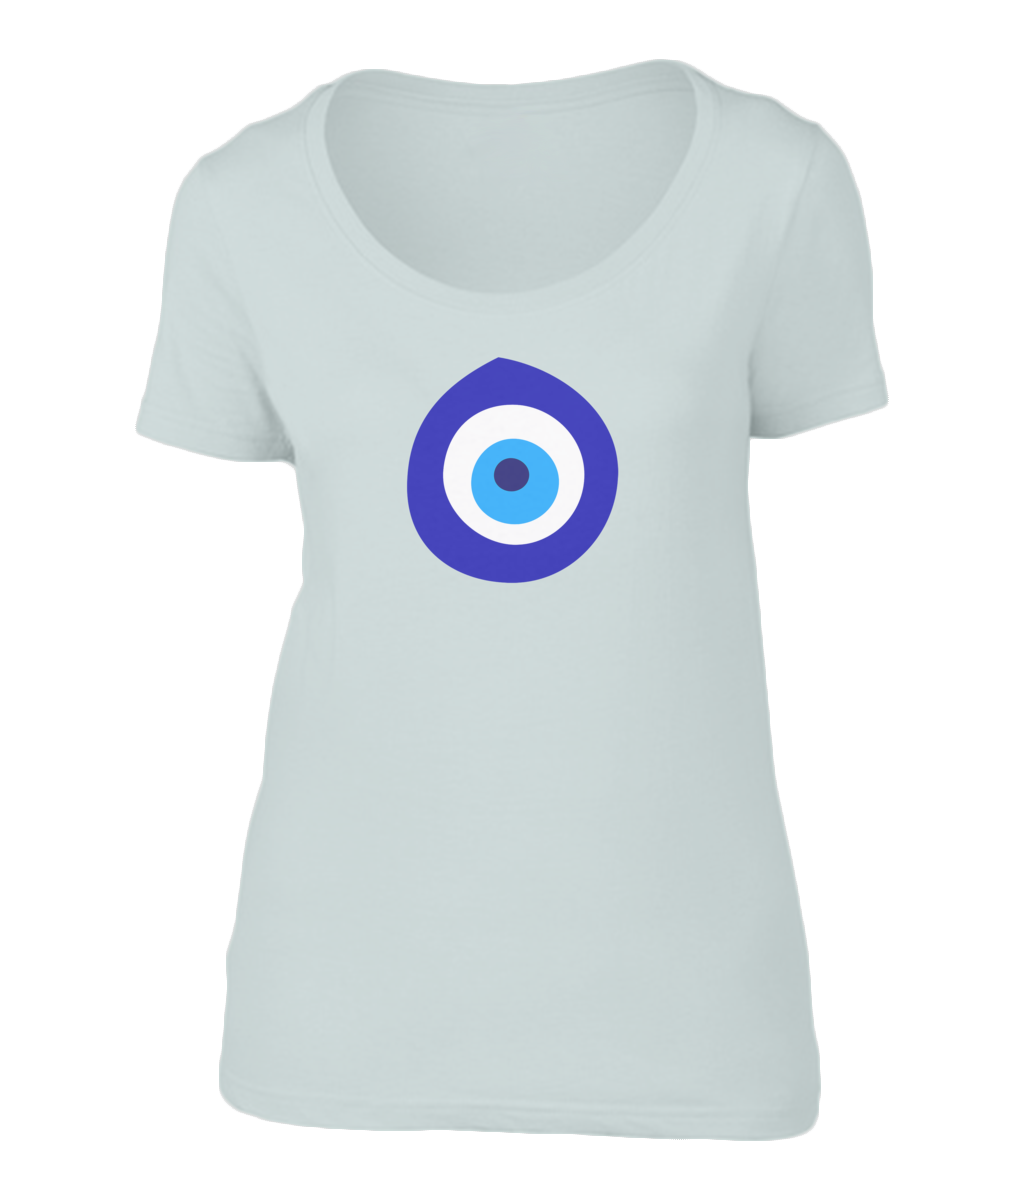 Protective (Anti-Evil) Eye  Ladies Sheer Scoop Neck T-Shirt